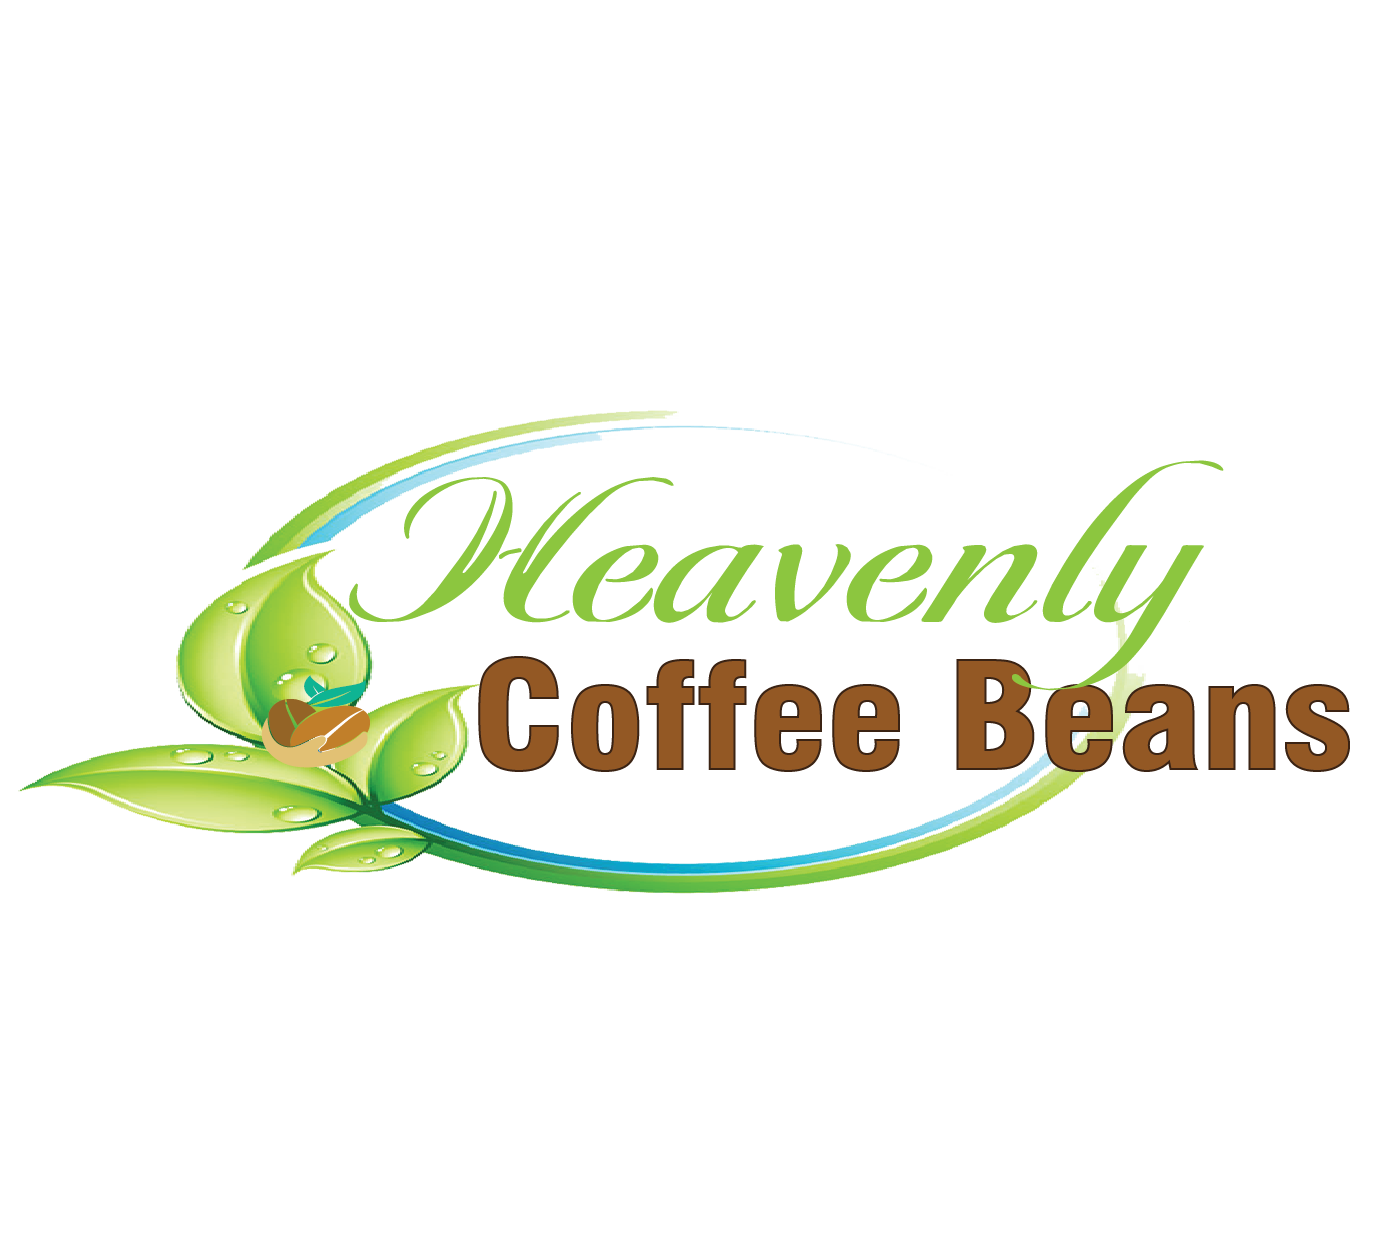 Heavenly Coffee Beans, LLC